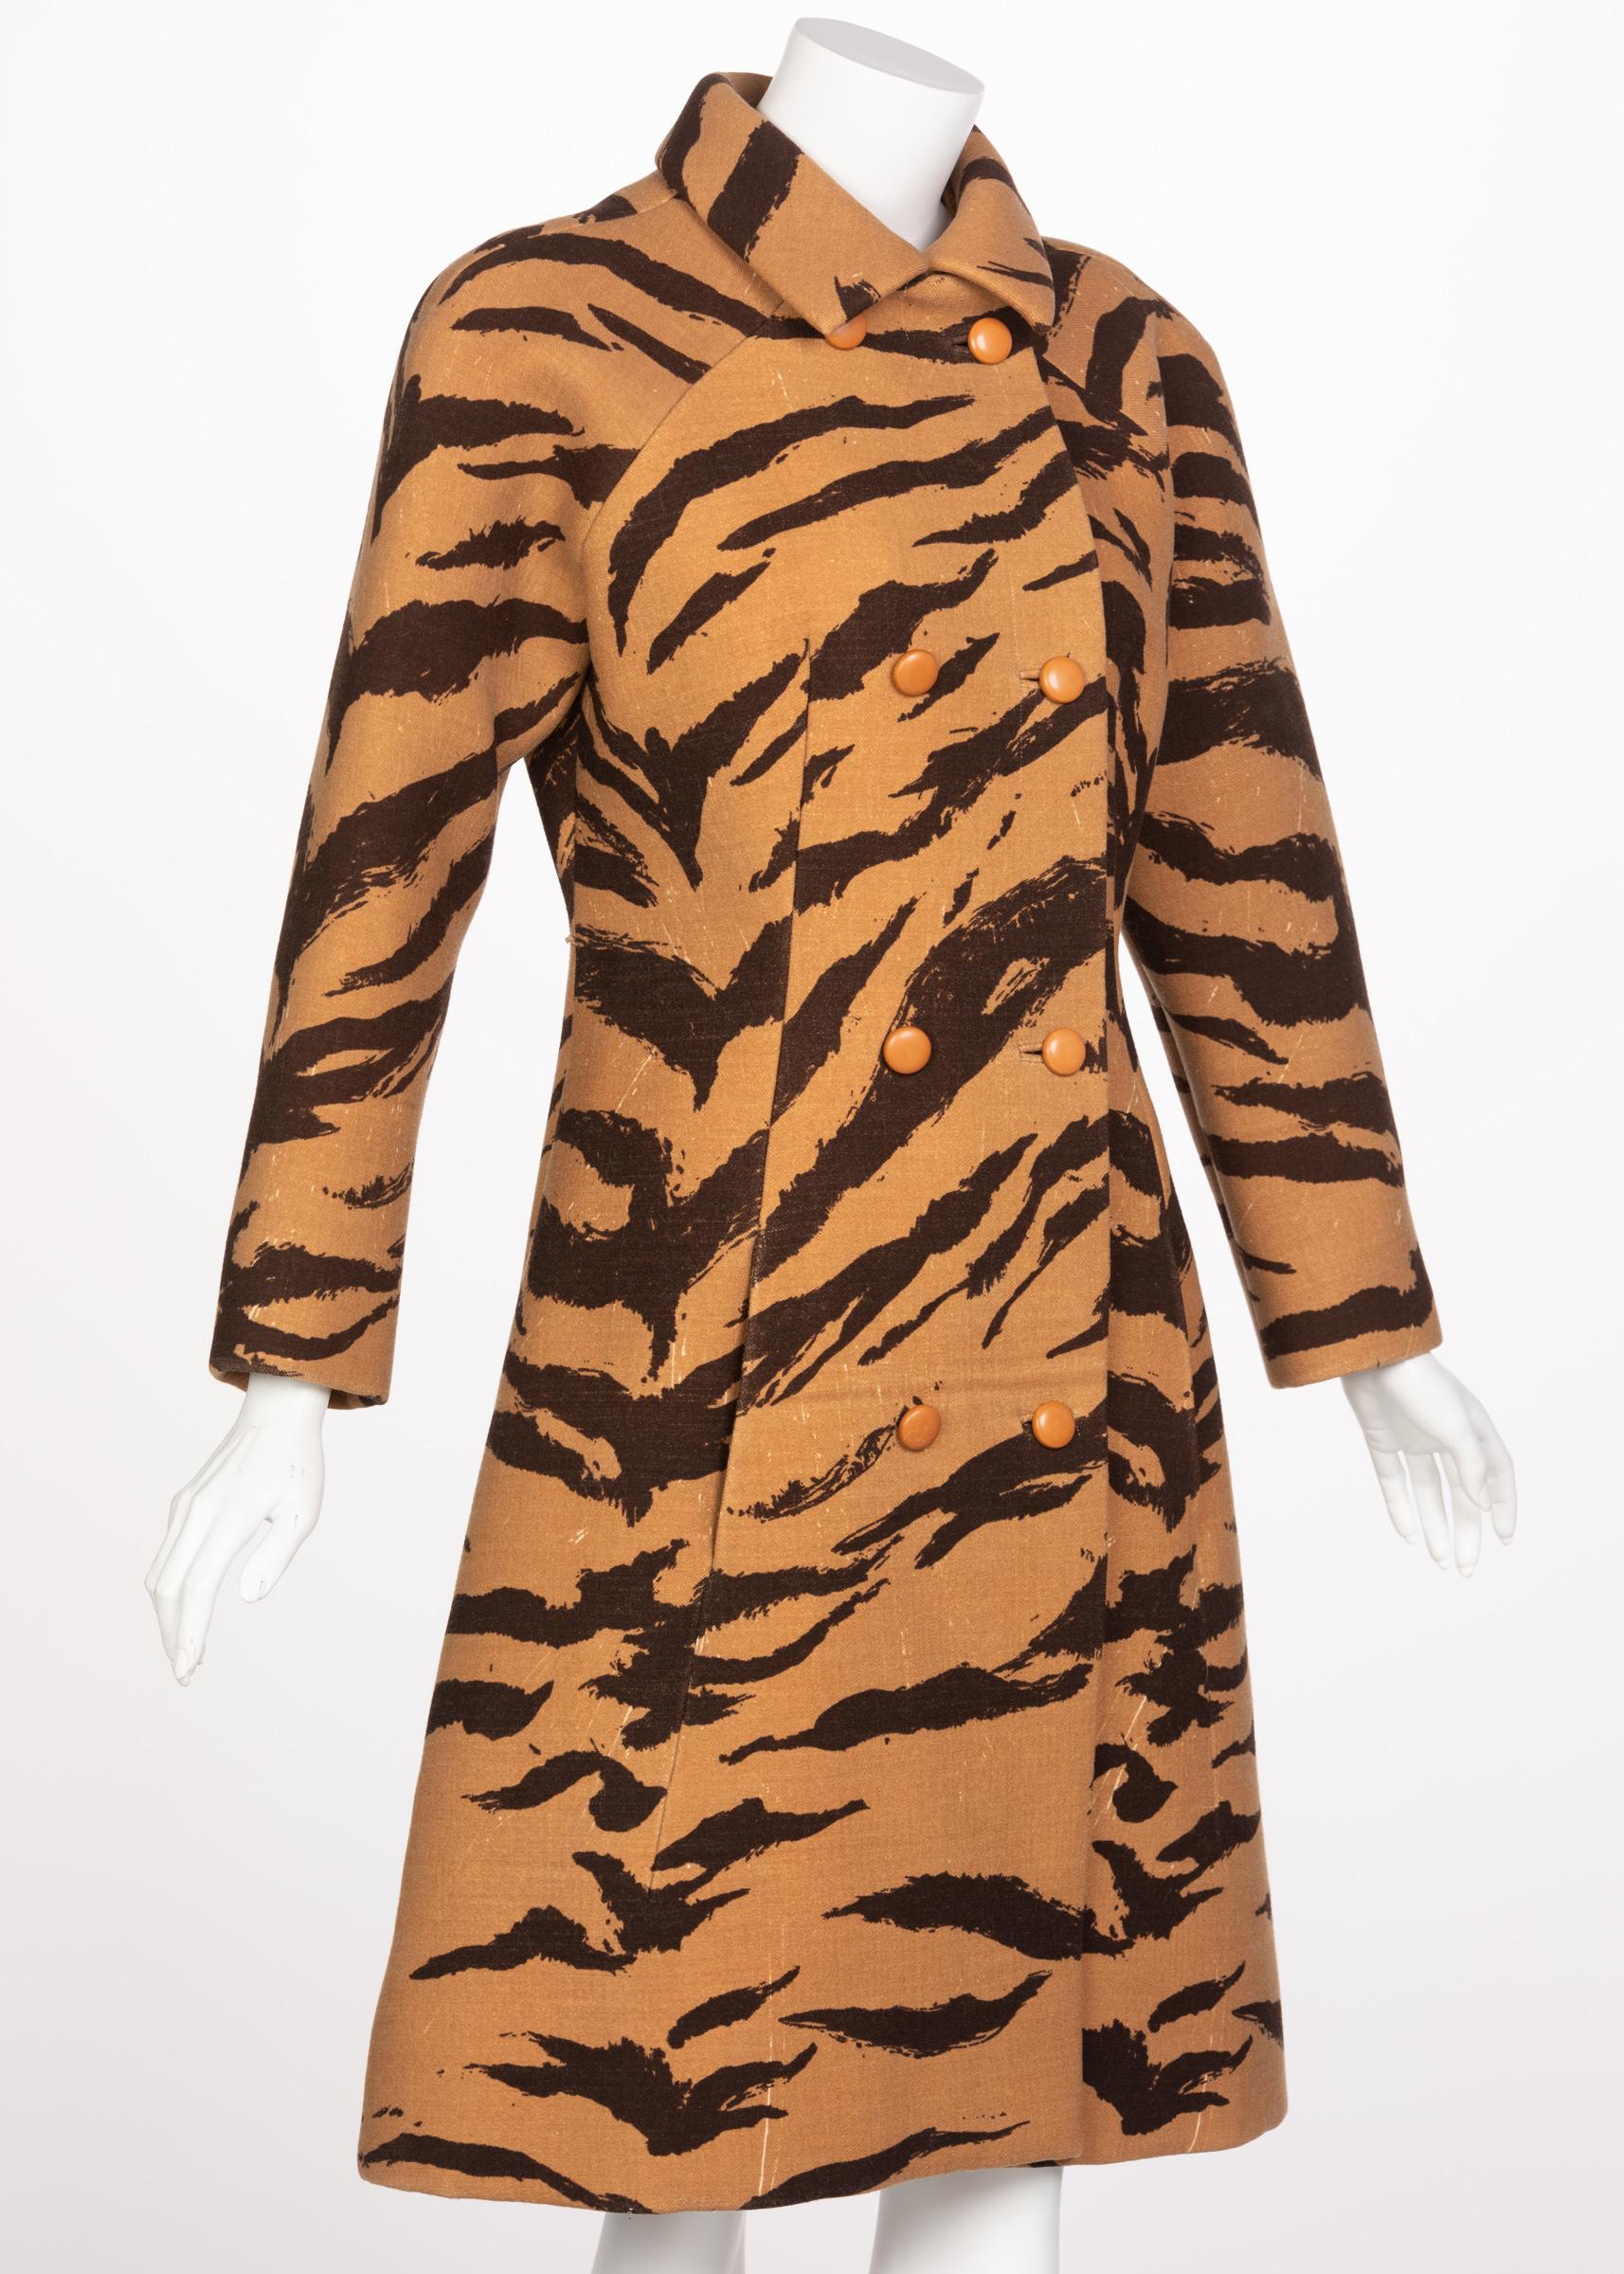 Hubert de Givenchy Haute Couture Coat Tiger Print Coat  Documented , 1969 2